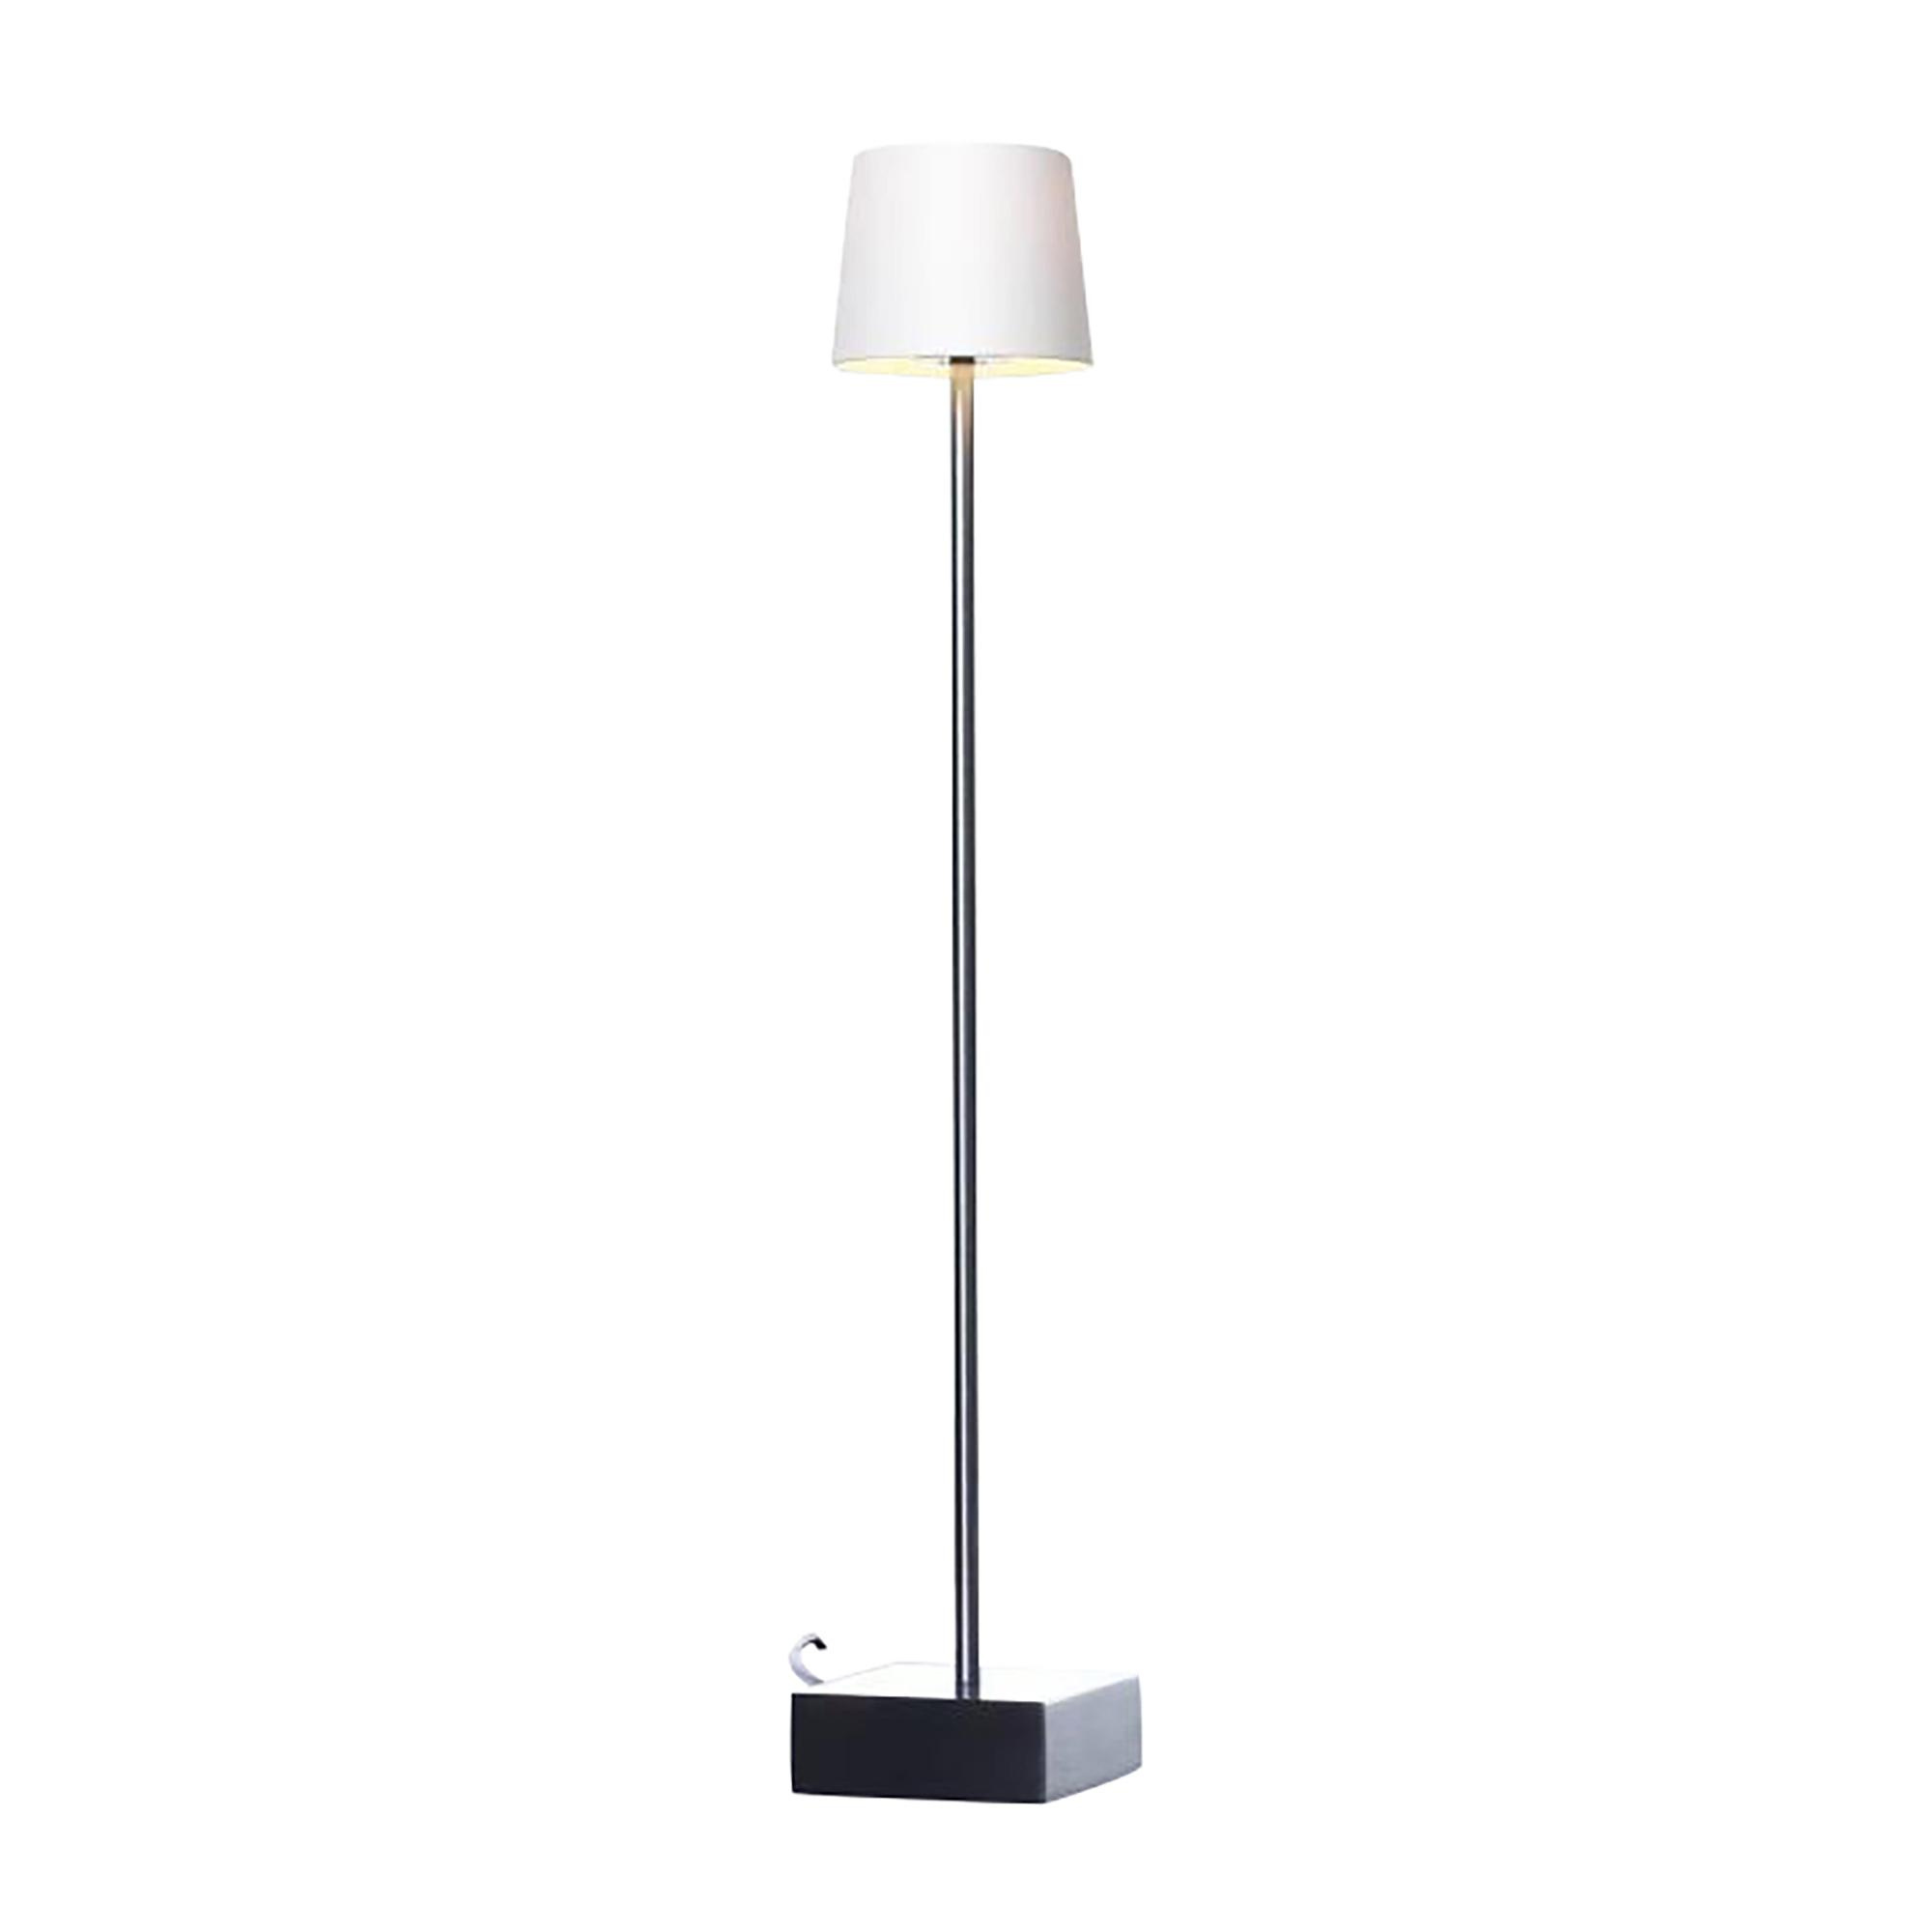 Anta - Cut LED Table Lamp with Dimmer - wei/Porzellan/Aluminium gebrstet/BxH 8x48cm /Gestell Aluminium/Kabel transparent